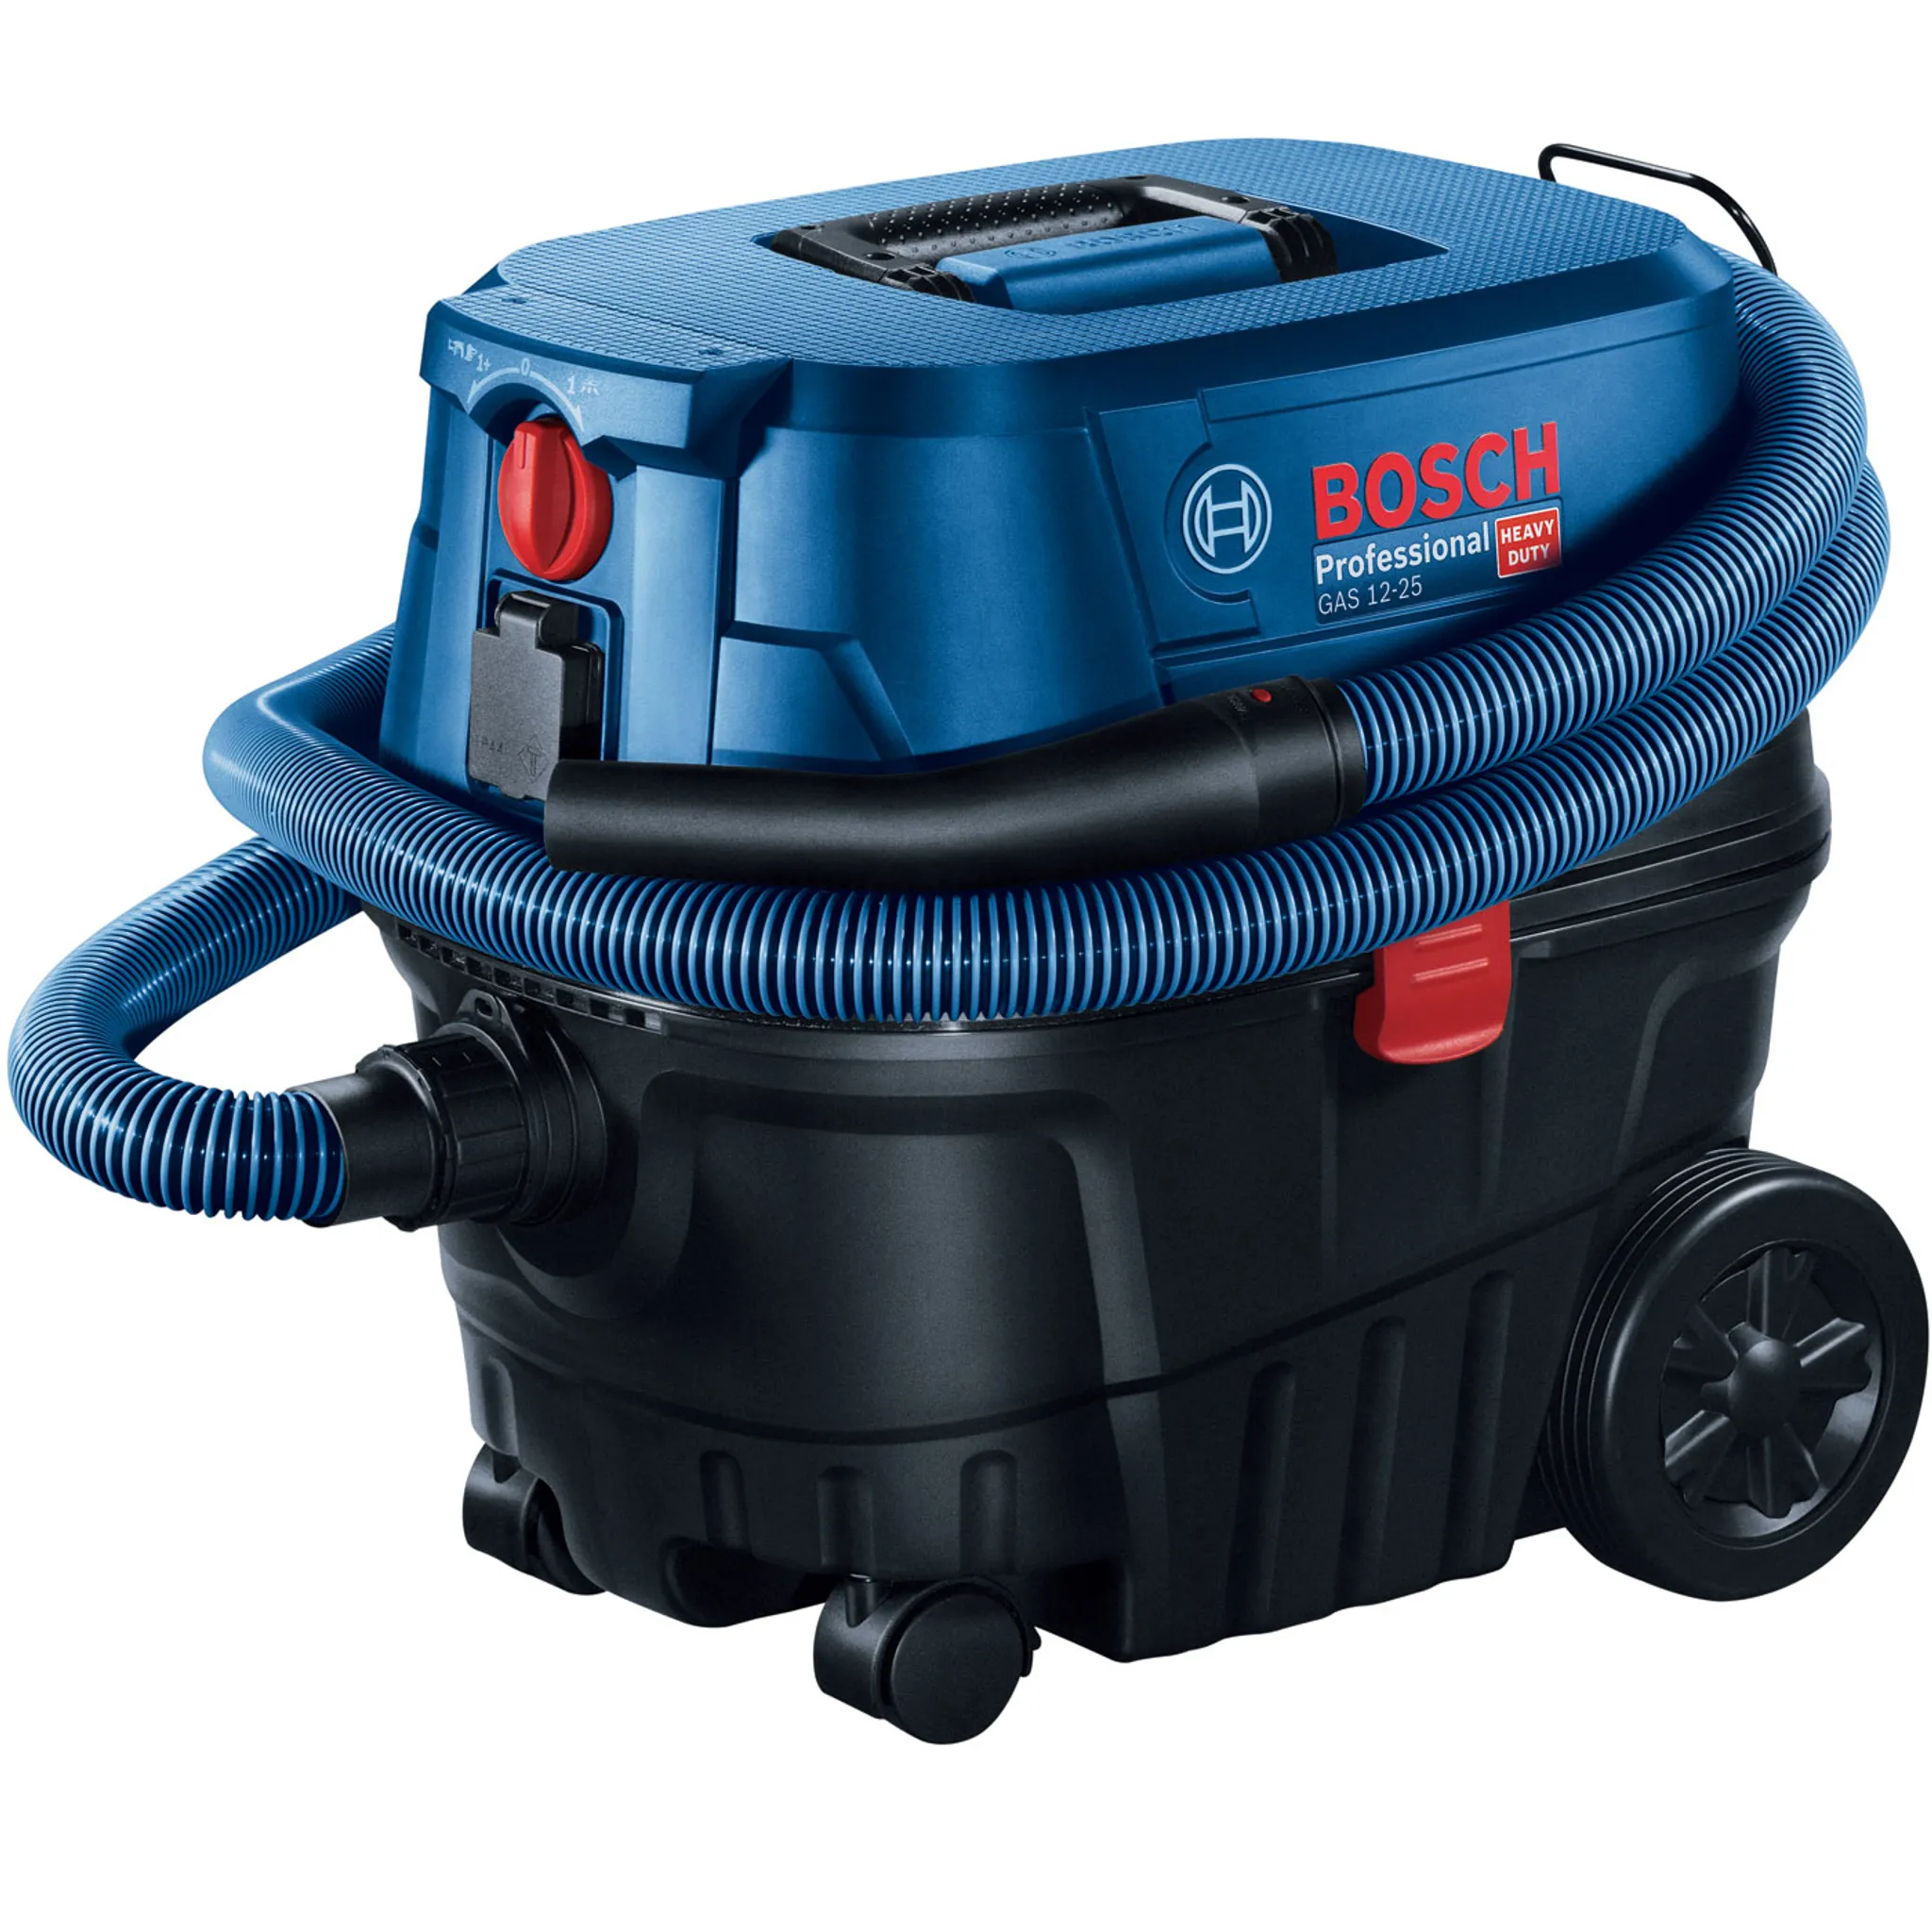 PL GAS 12-25 Professional Bosch